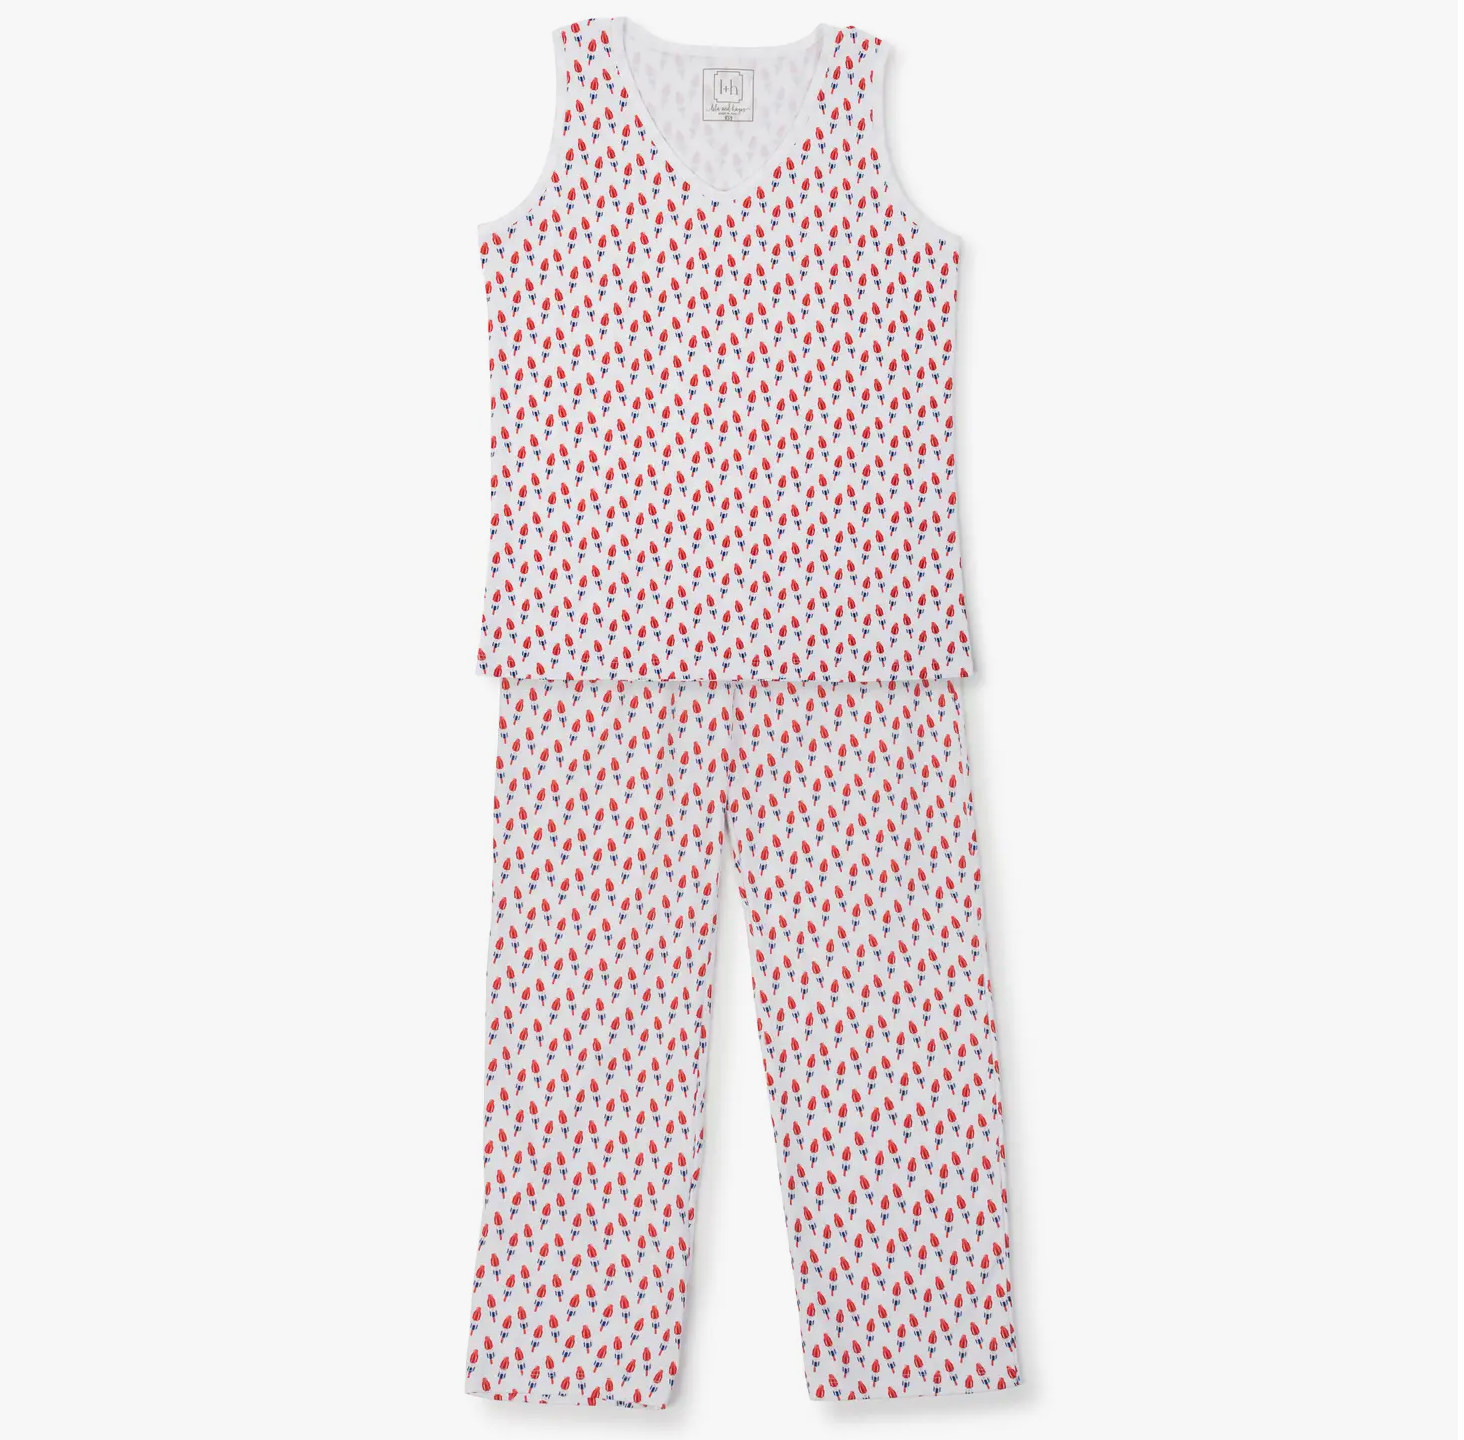 Sally Women's Pima Cotton Pajama Pant Set - Patriotic Popsicle